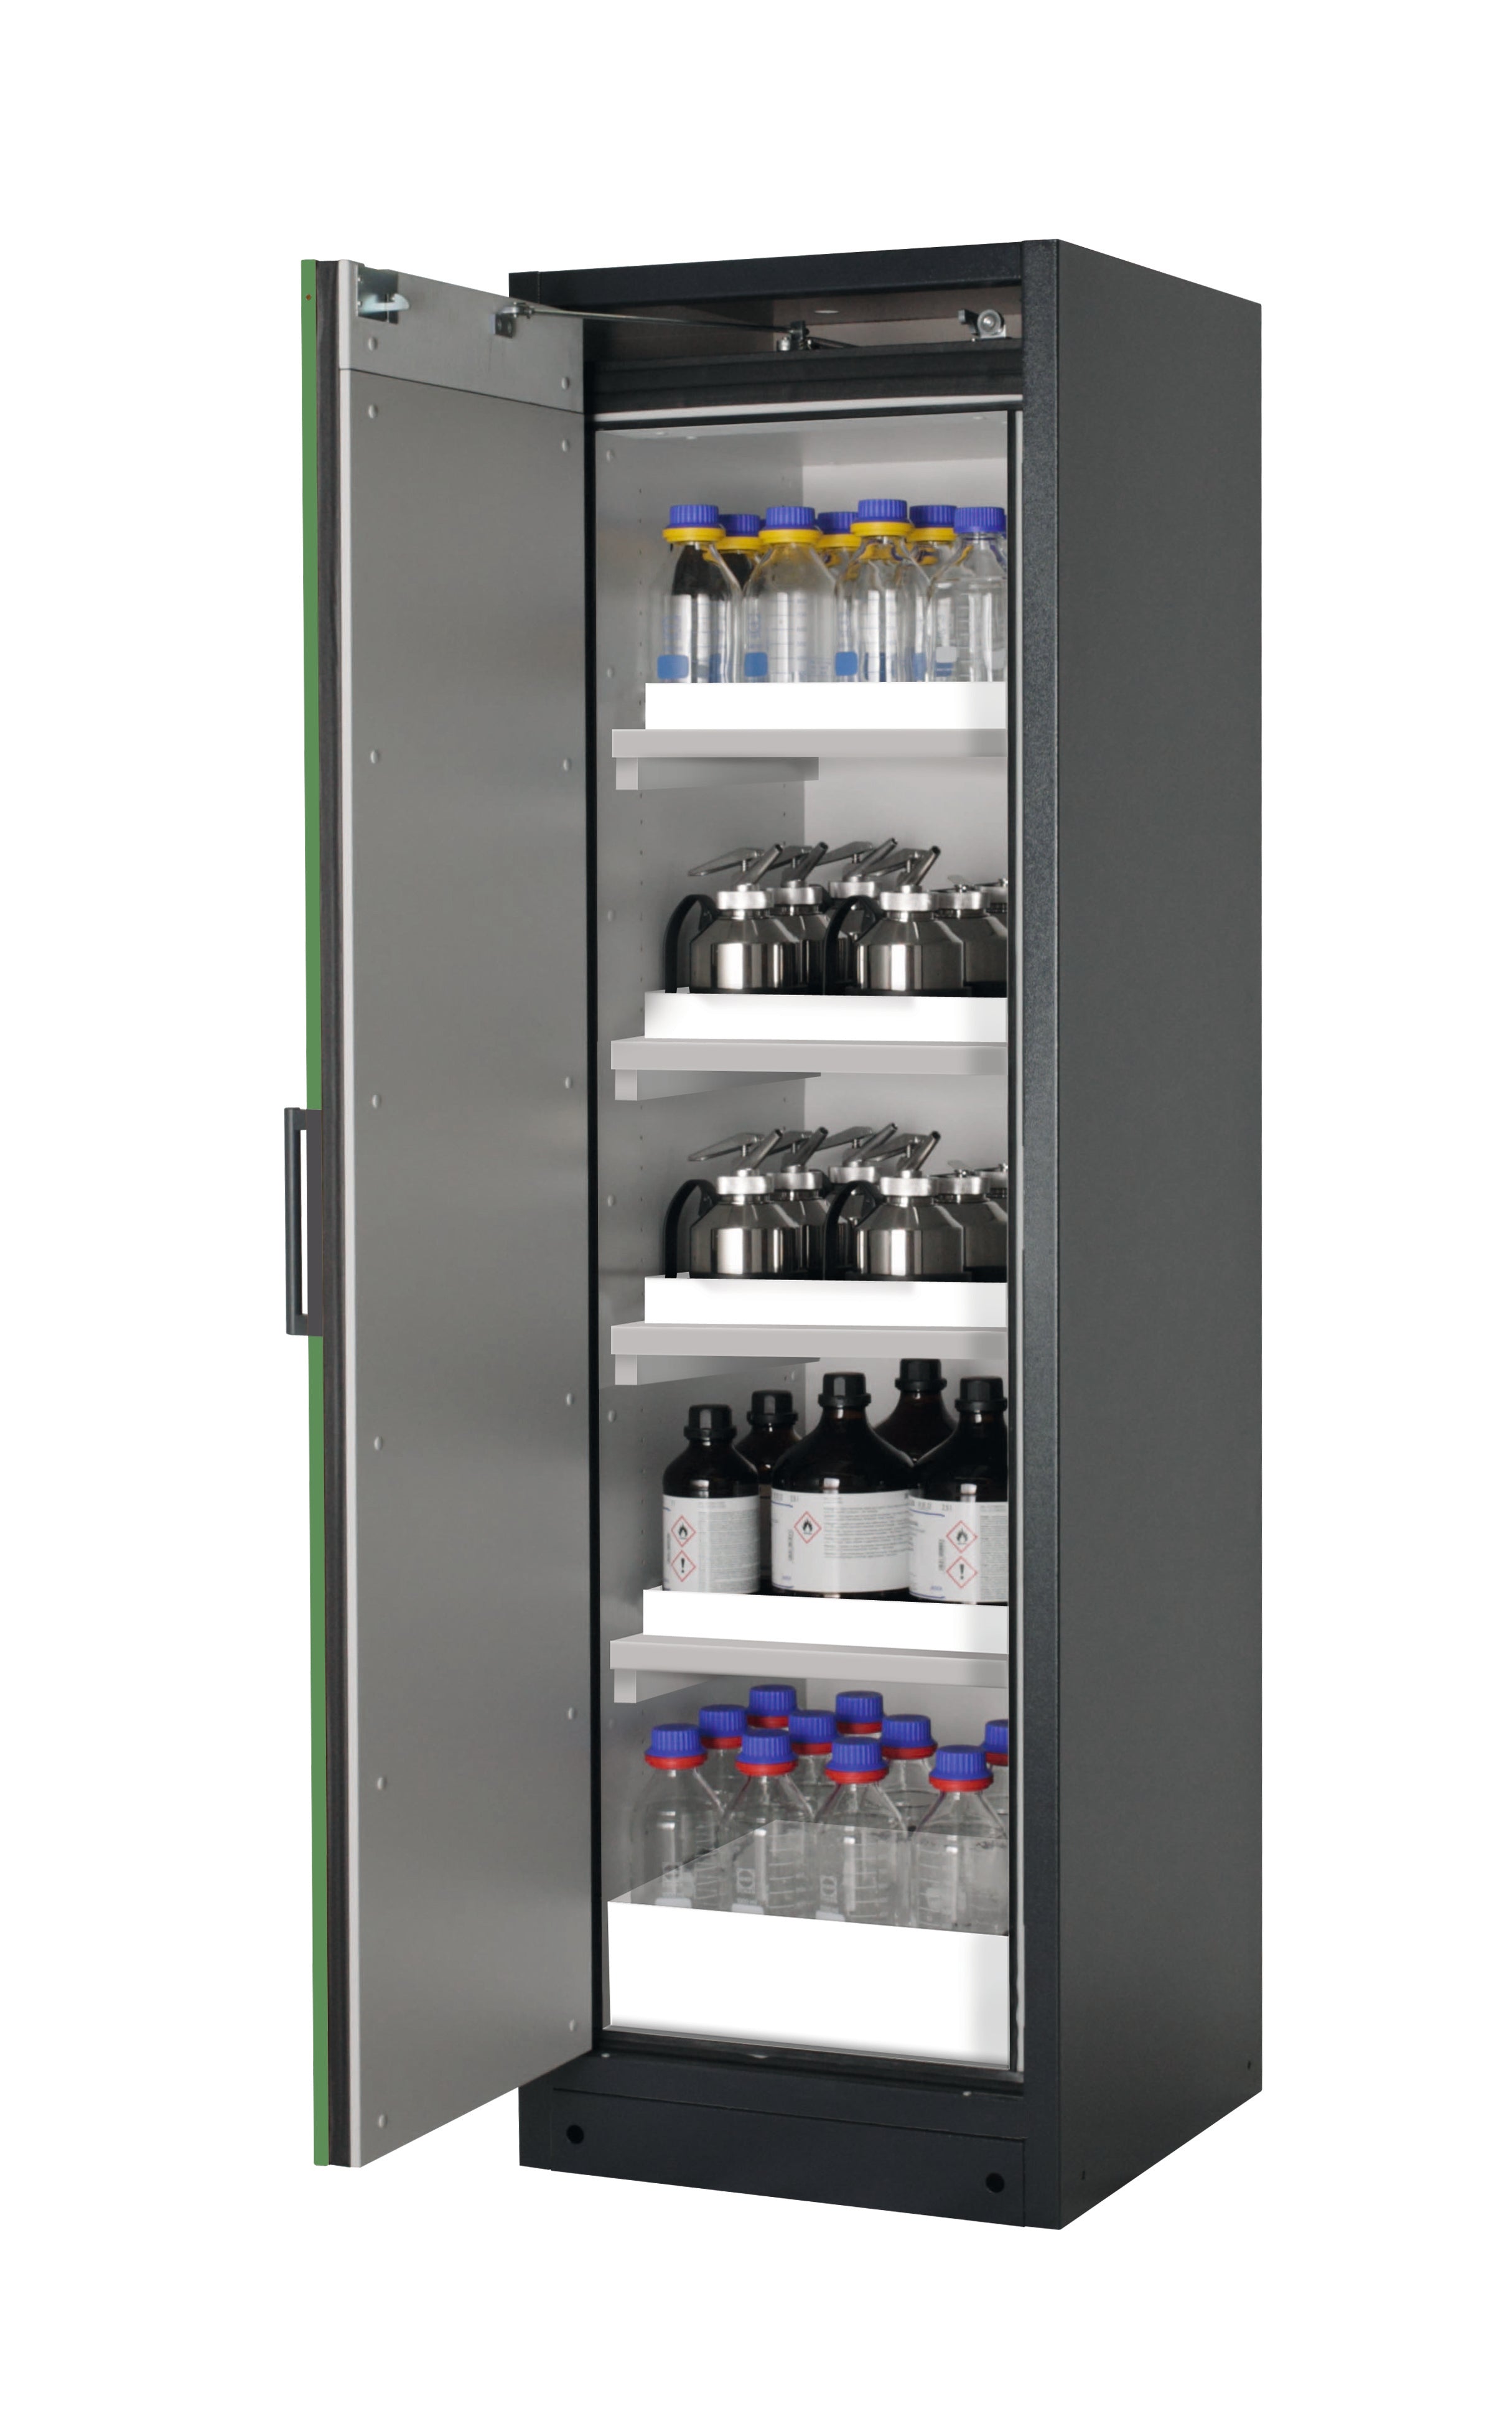 Type 90 safety storage cabinet Q-PEGASUS-90 model Q90.195.060.WDAC in reseda green RAL 6011 with 4x tray shelf (standard) (polypropylene),